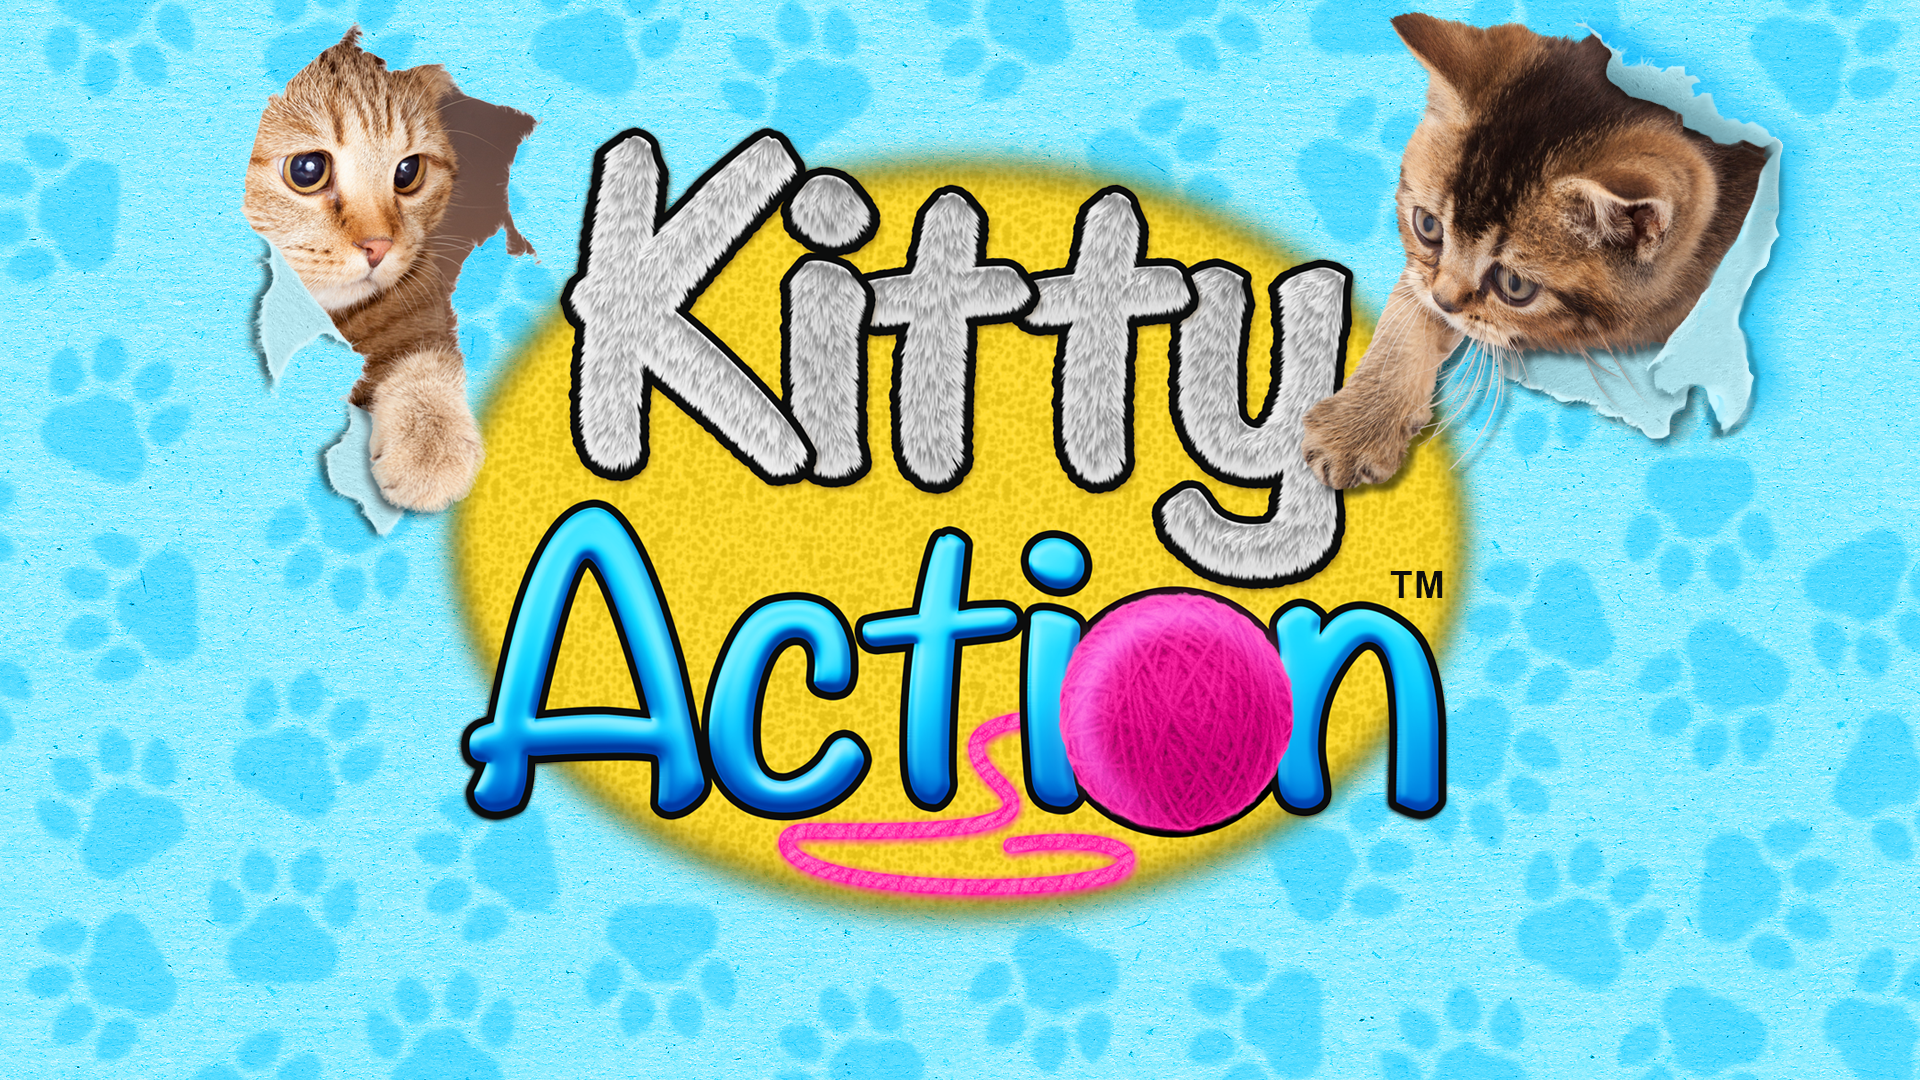 splash_screen_kitty_action.png